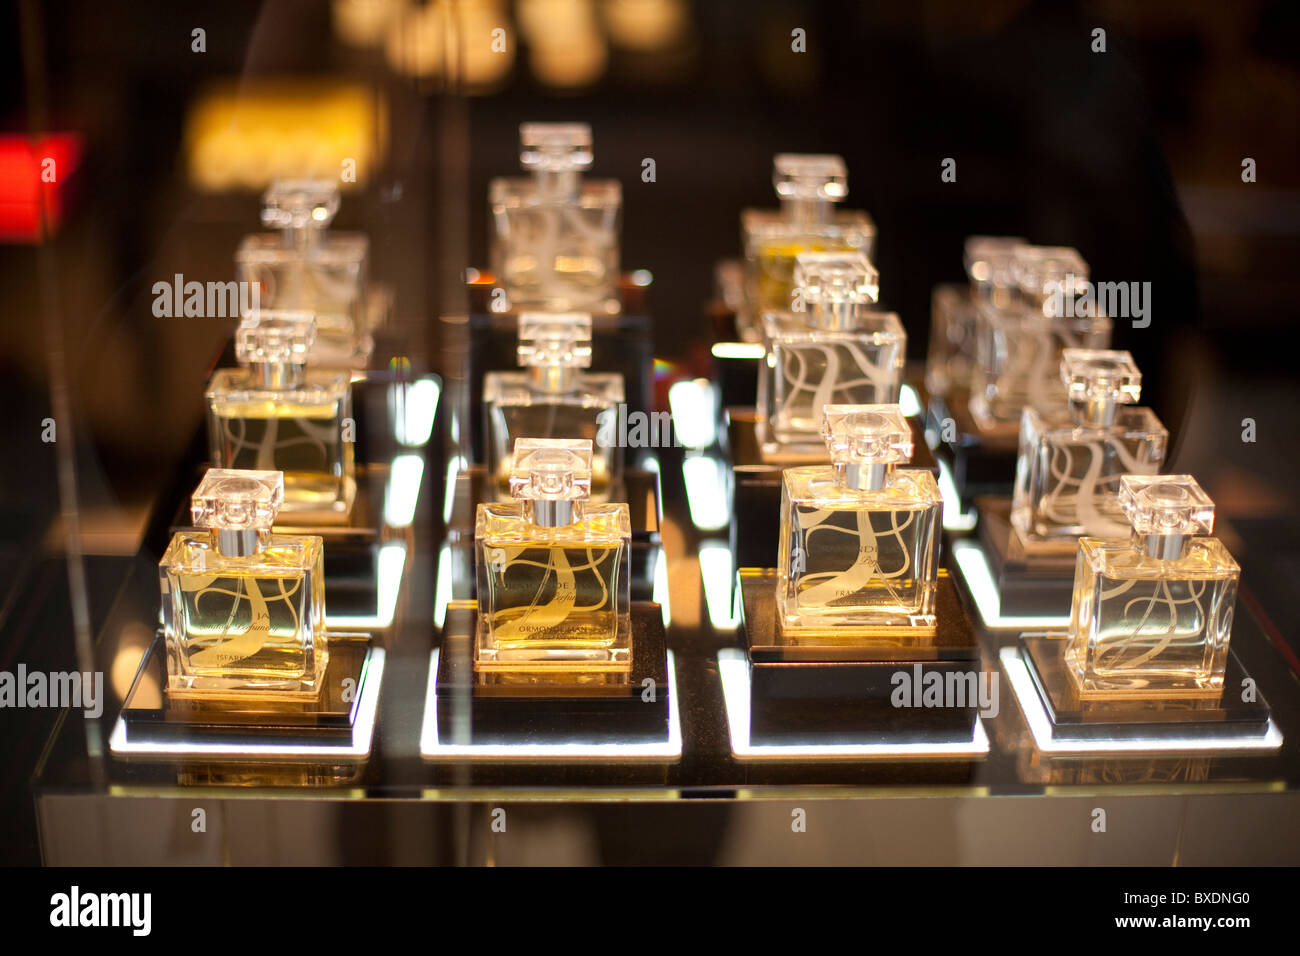 Ormonde Jayne perfume bottles. Stock Photo